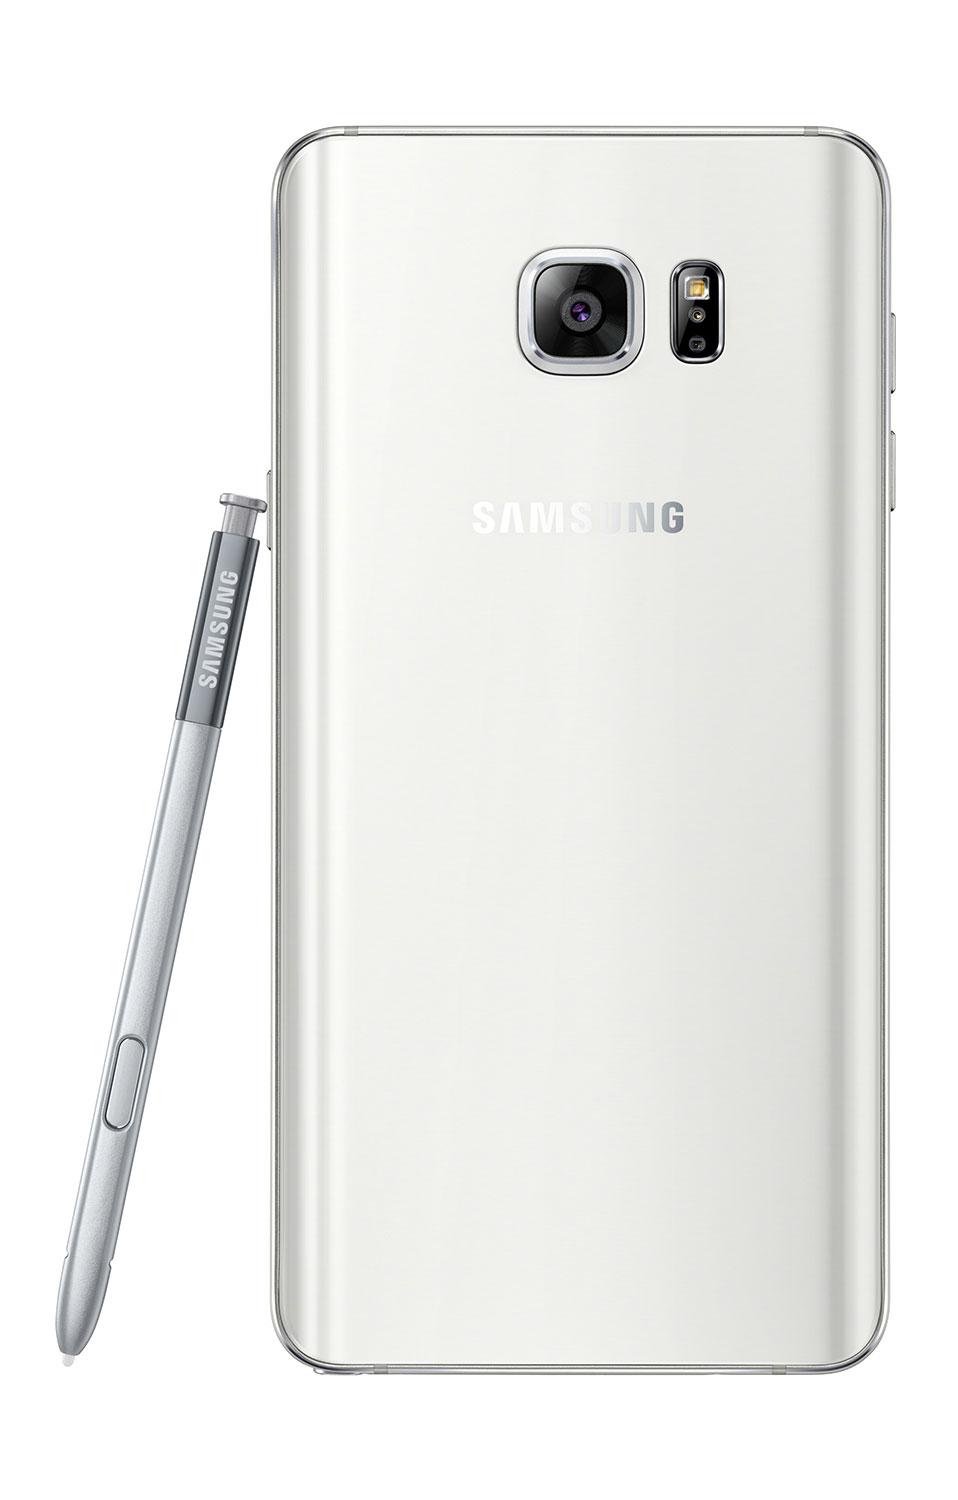 Samsung Galaxy Note 5 blanco vista trasera